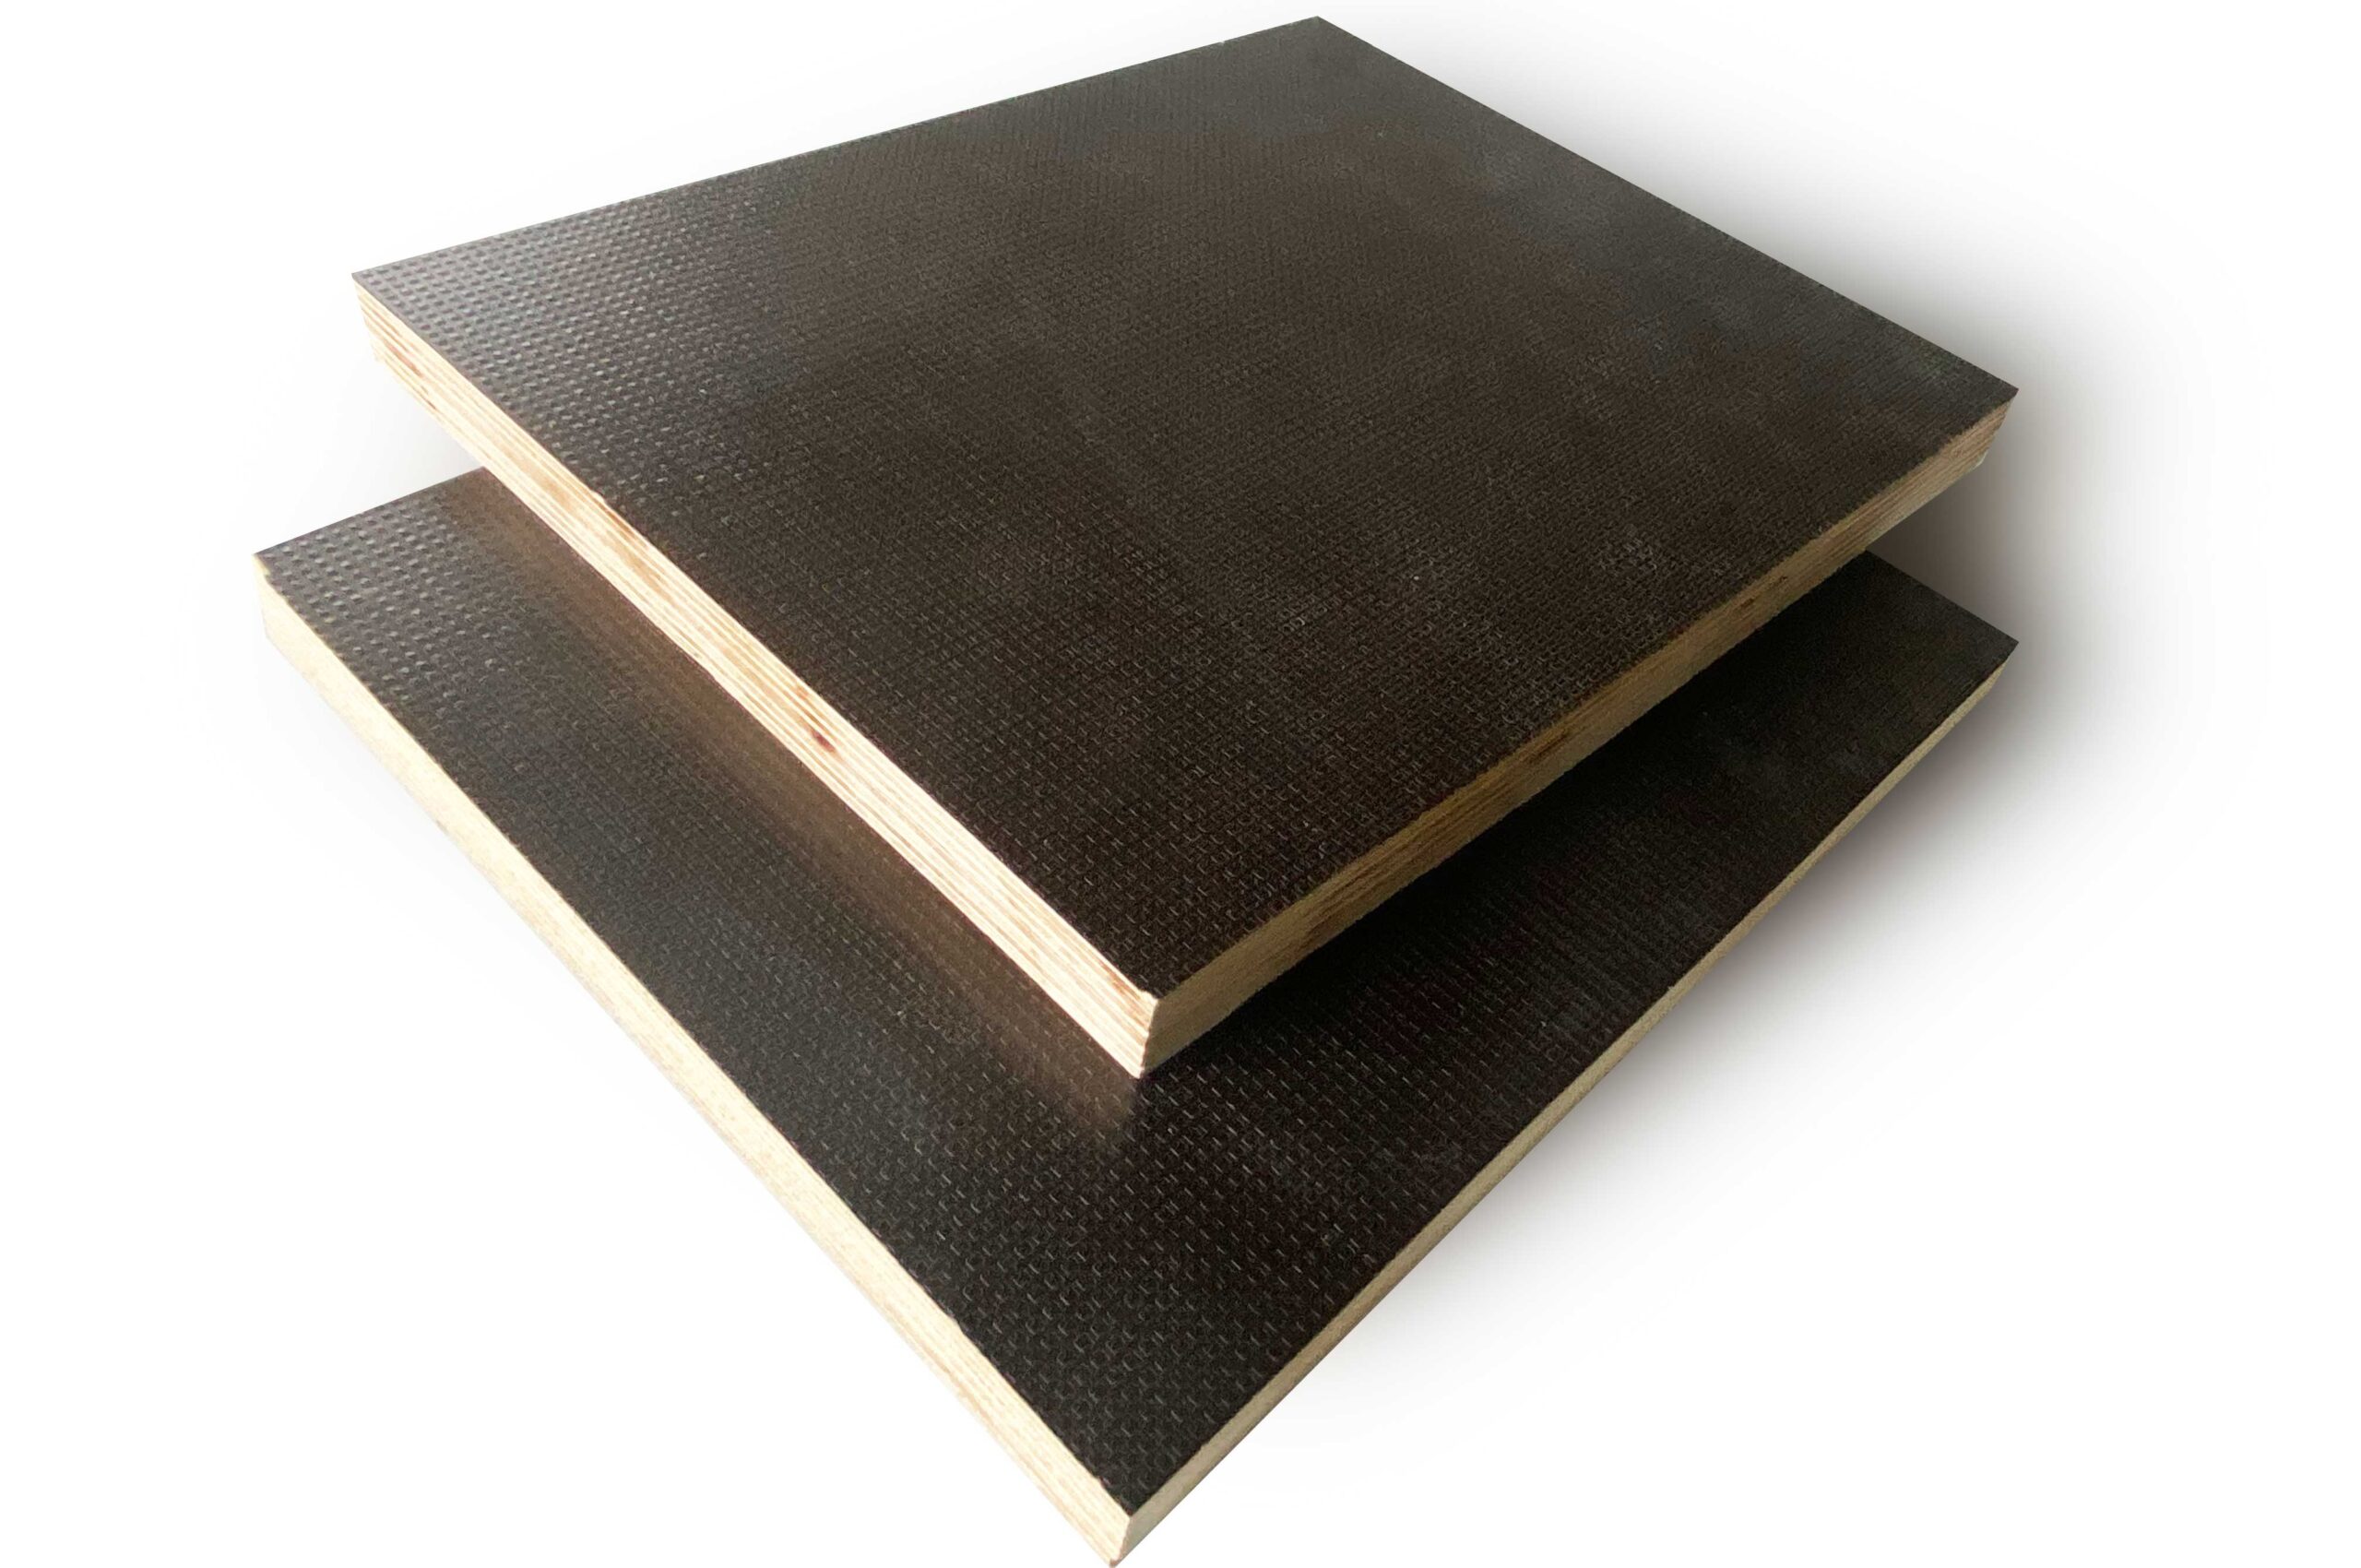 Anti-Slip film faced plywood